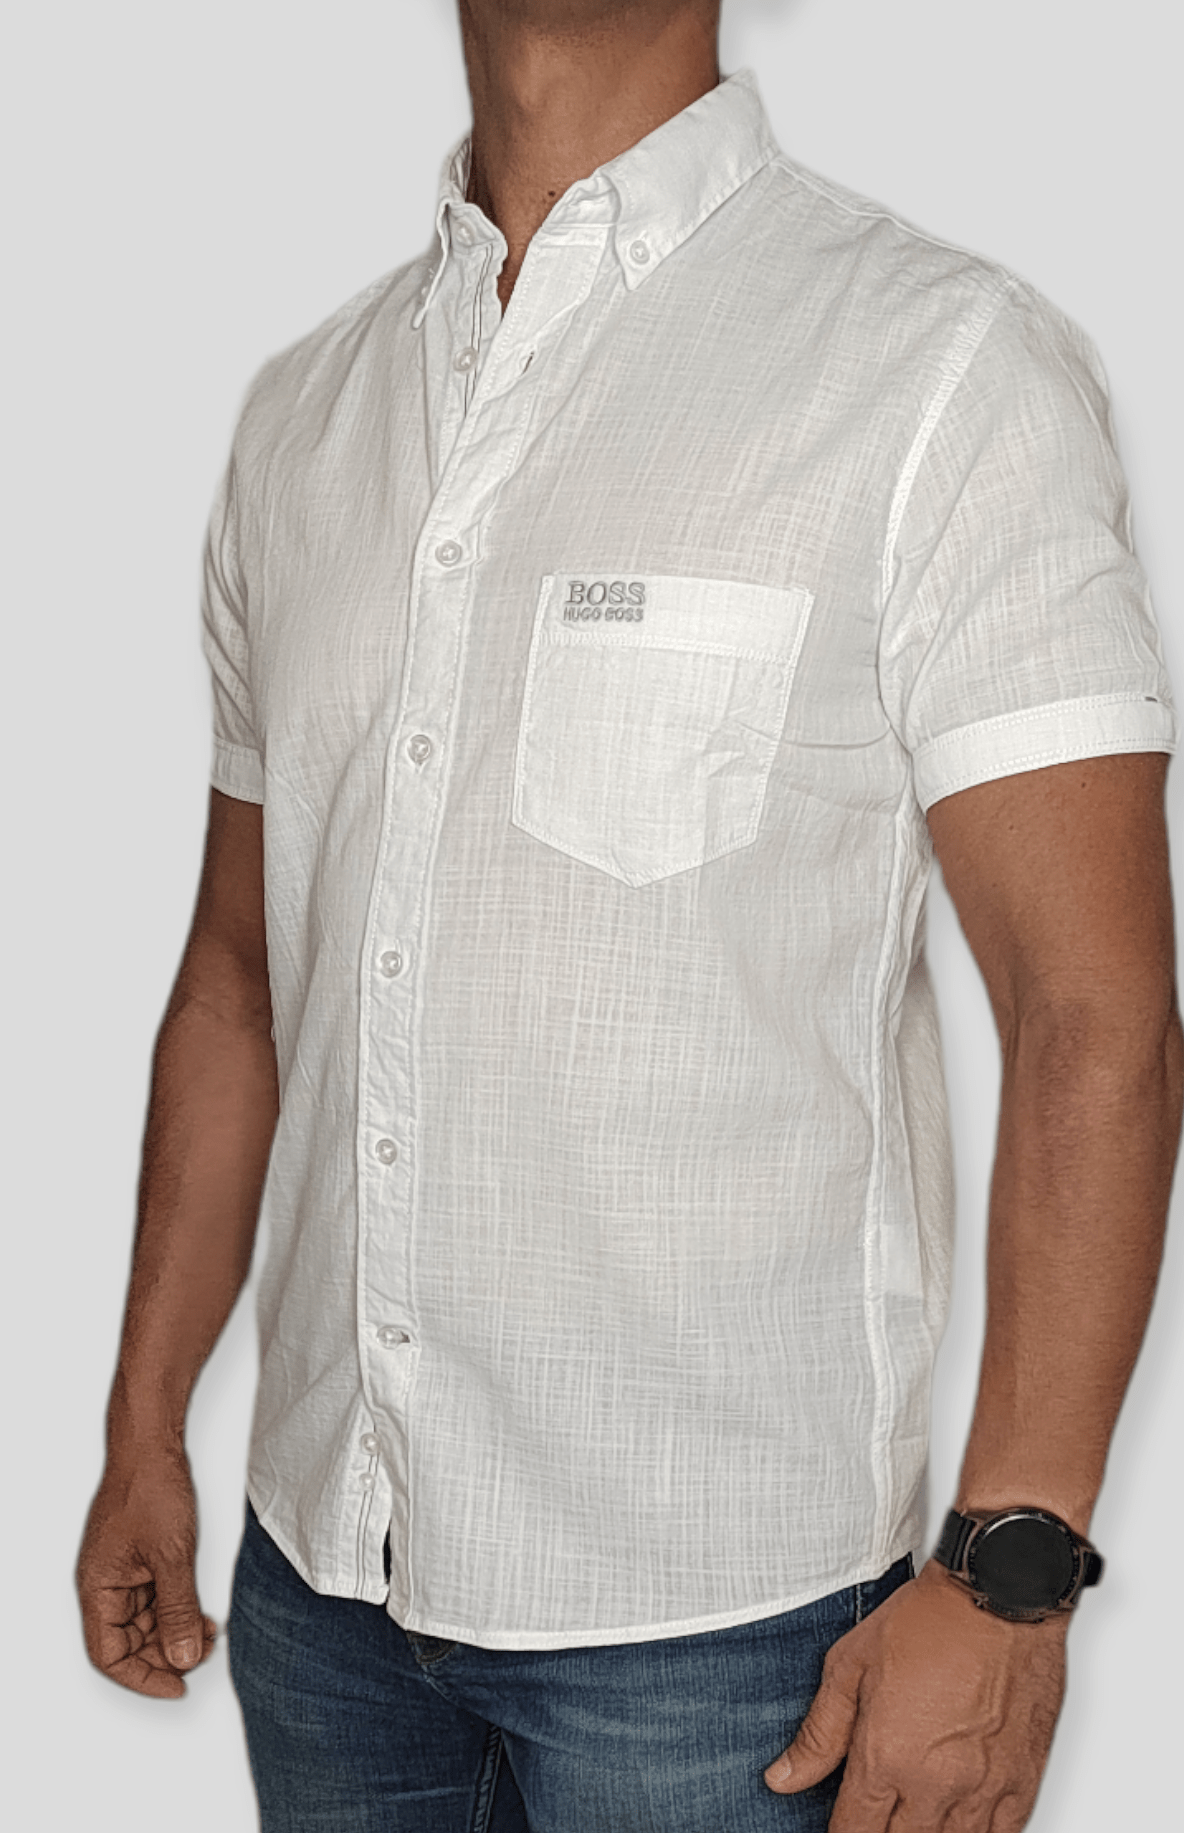 ElOutlet - Men Summer Shirts Men Shirt (Slim-Fit) - White